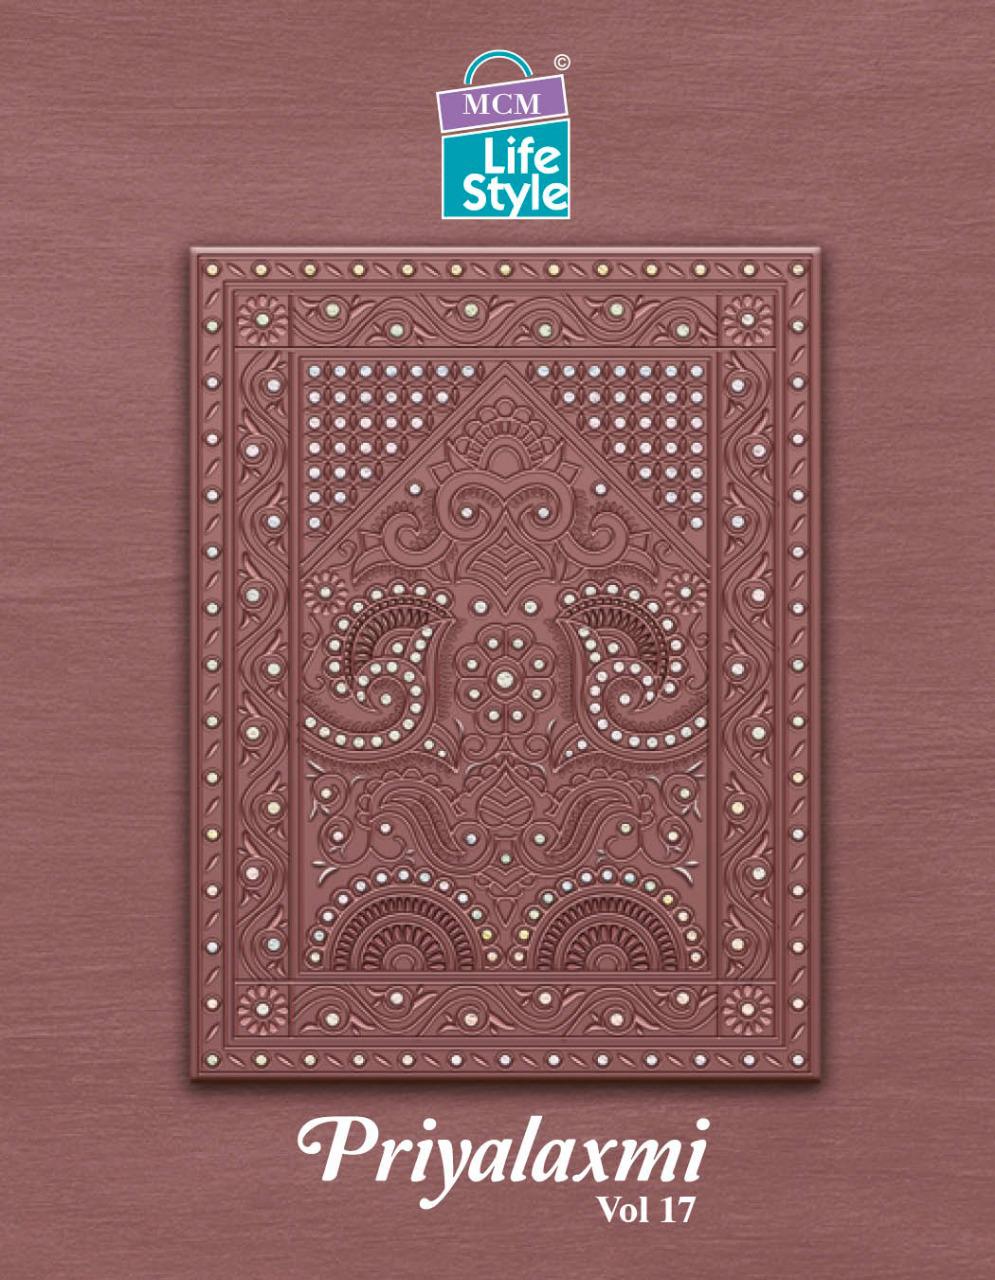 Priyalaxmi Vol 17 By Mcm Lifestyle Cotton Dress Materials At Best Price